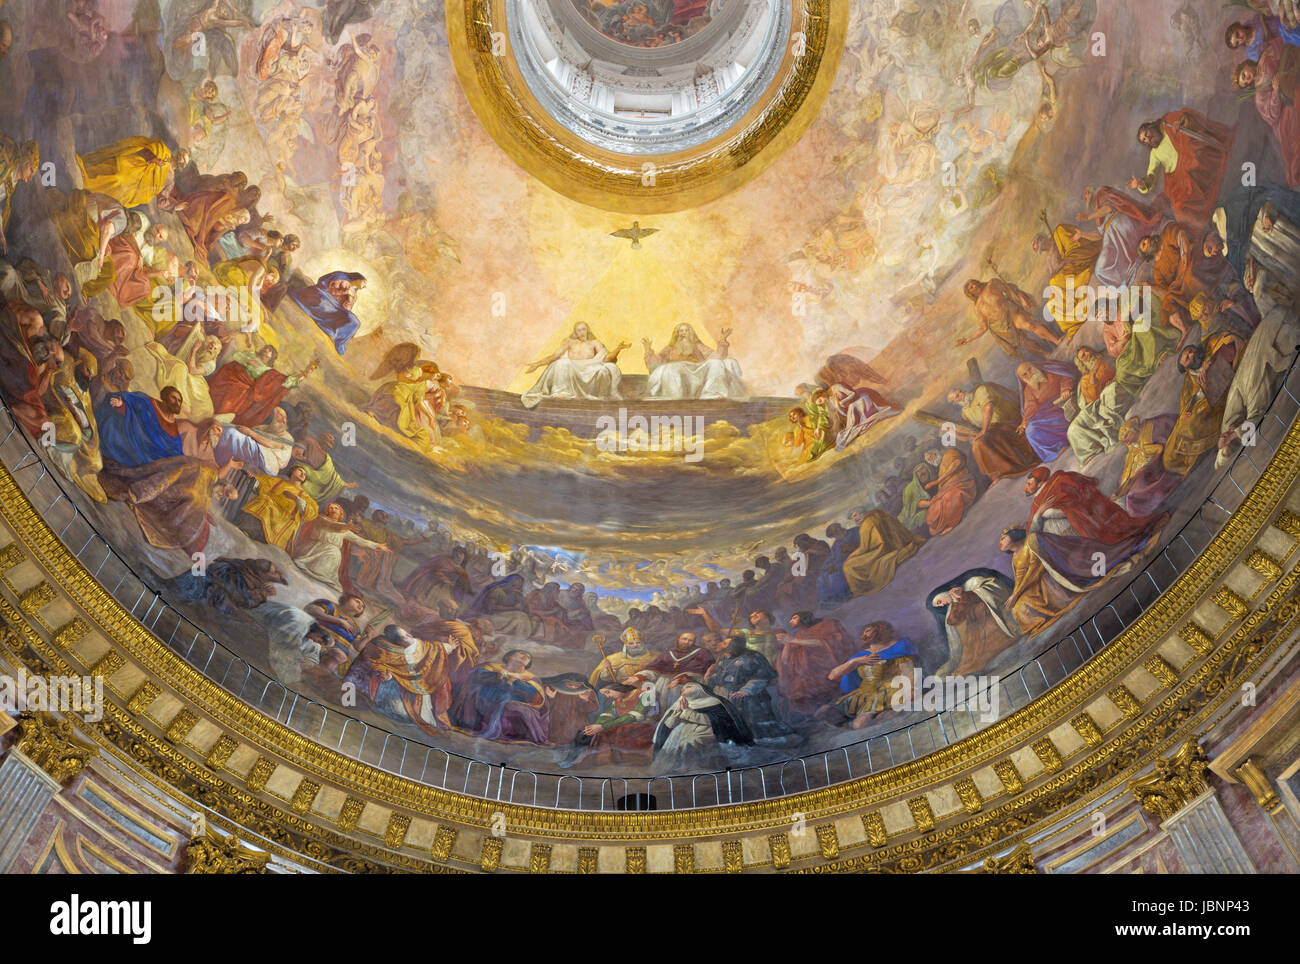 TURIN, ITALY - MARCH 15, 2017: The fresco of Holy Trinity in the Glory in cupola of church Chiesa della Santissima Trinita Stock Photo